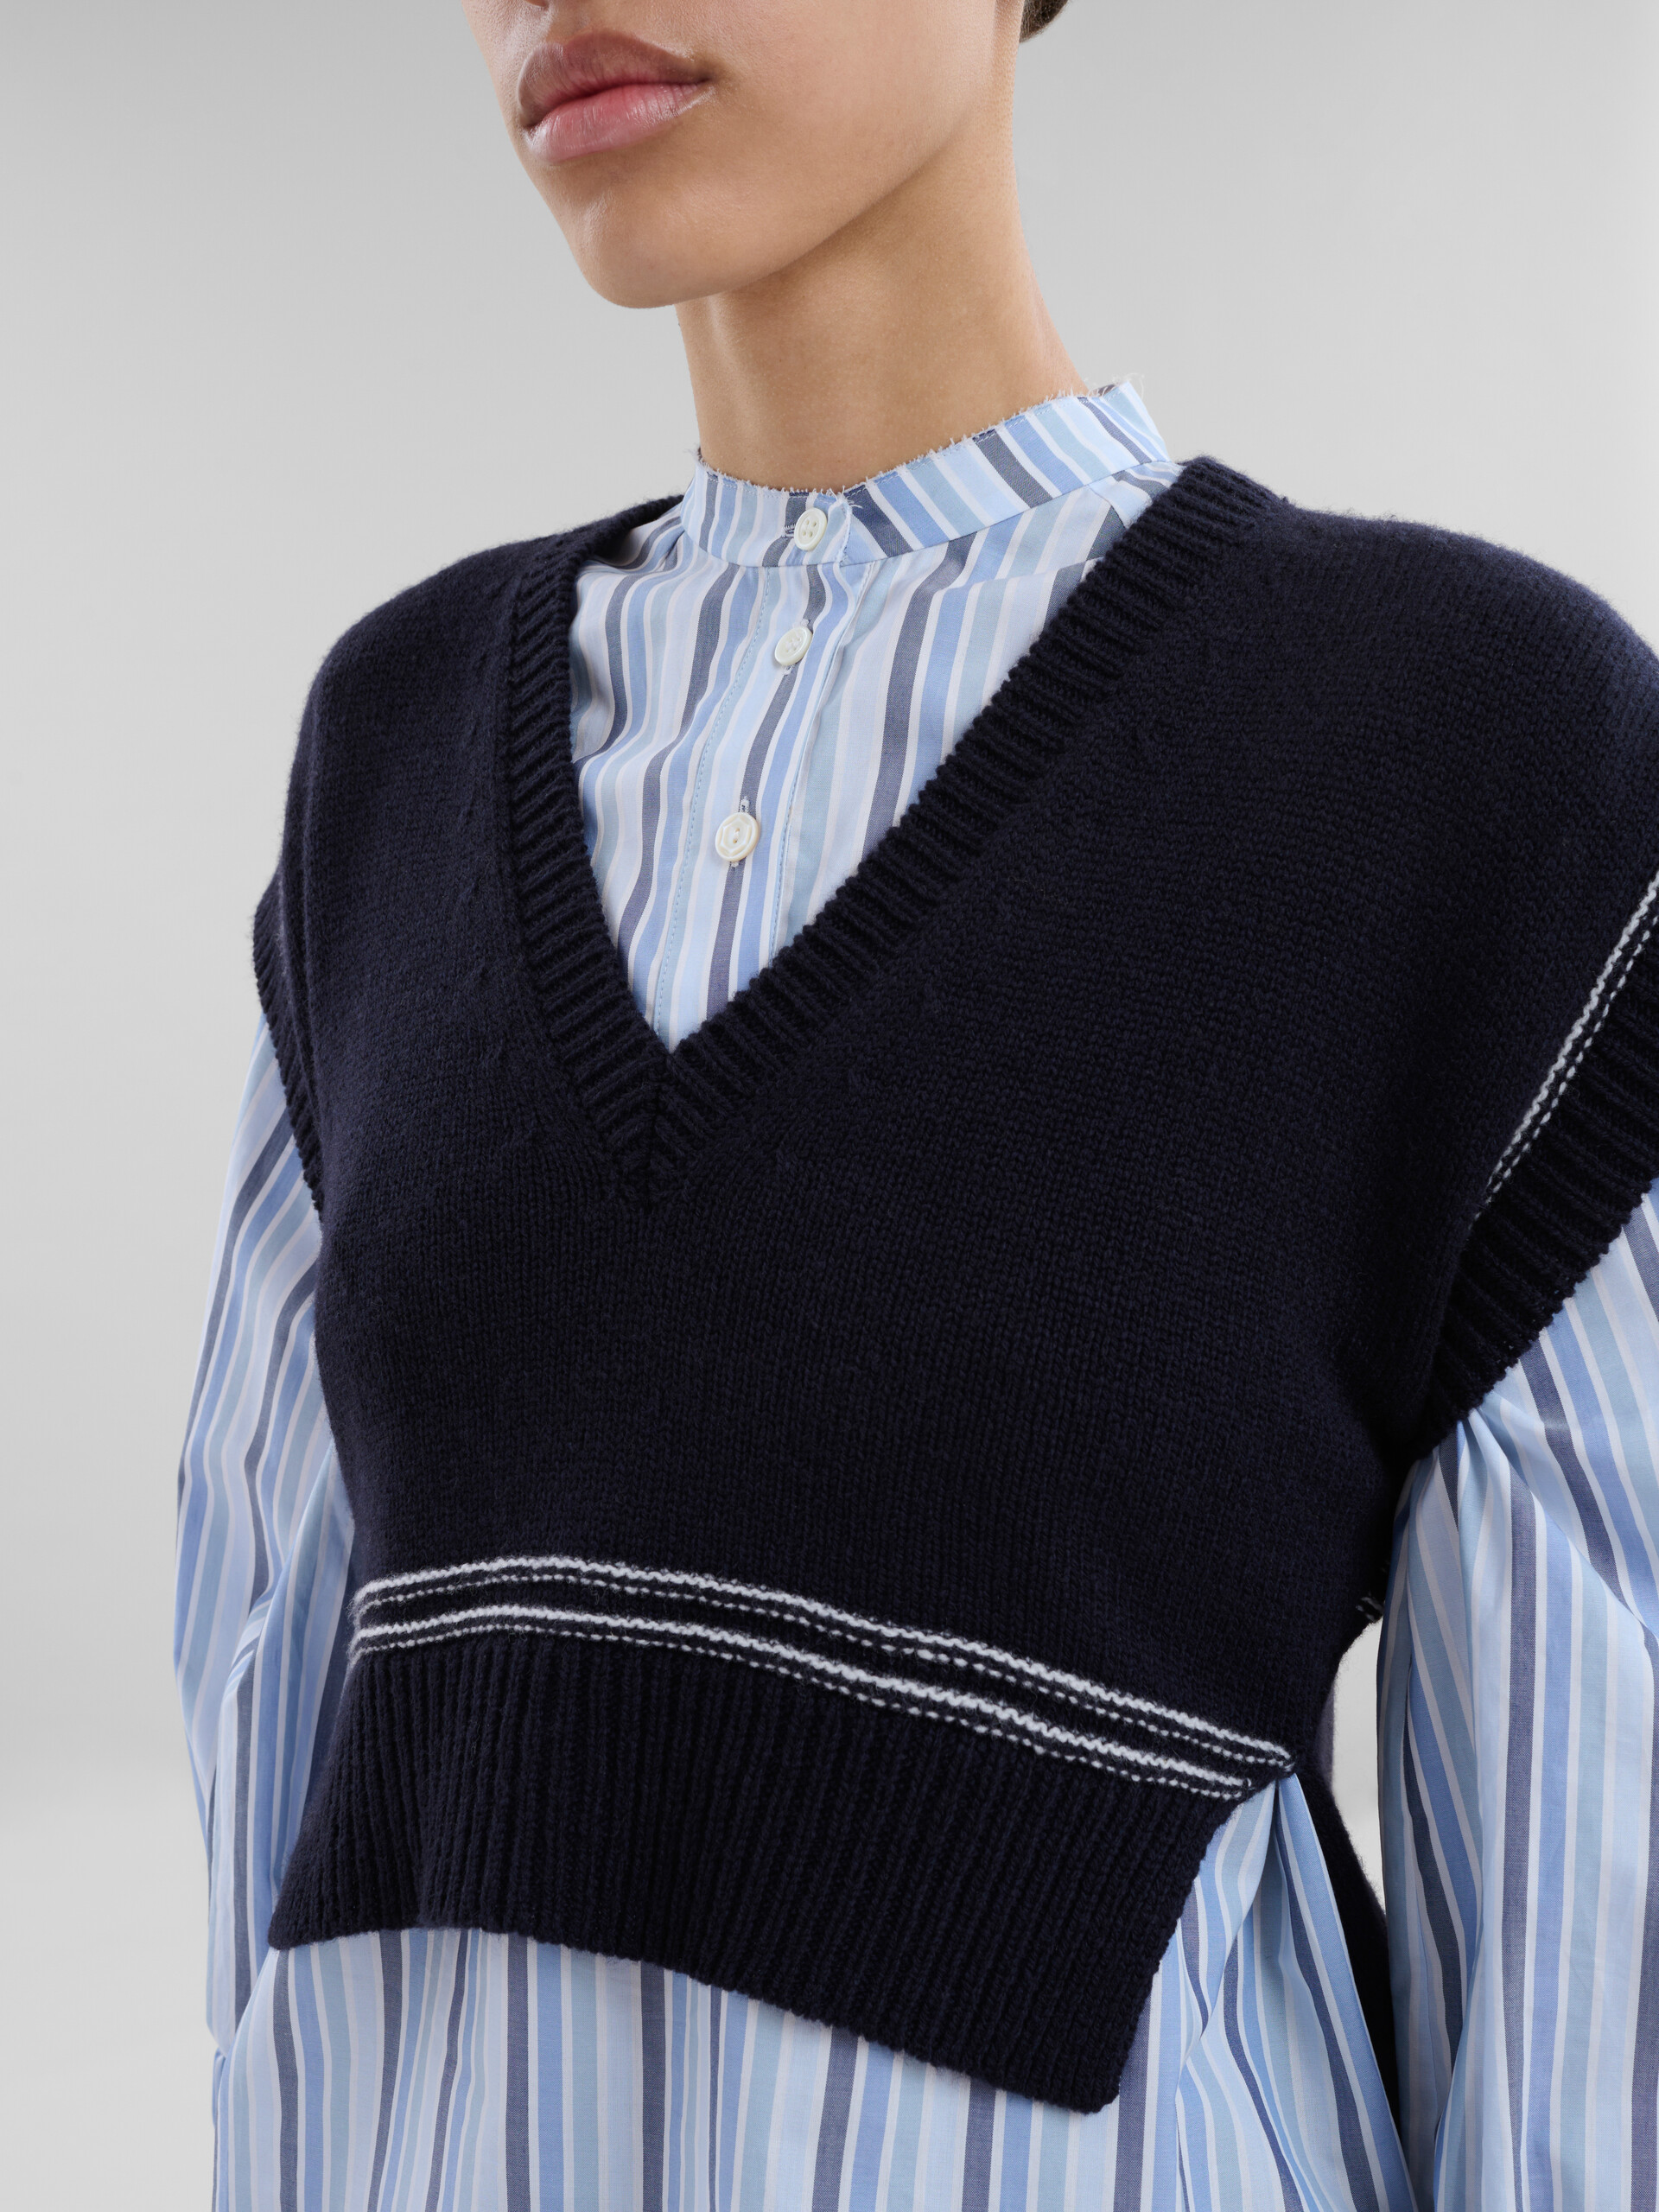 Gilet in lana vergine navy con intarsio Marni - Pullover - Image 4